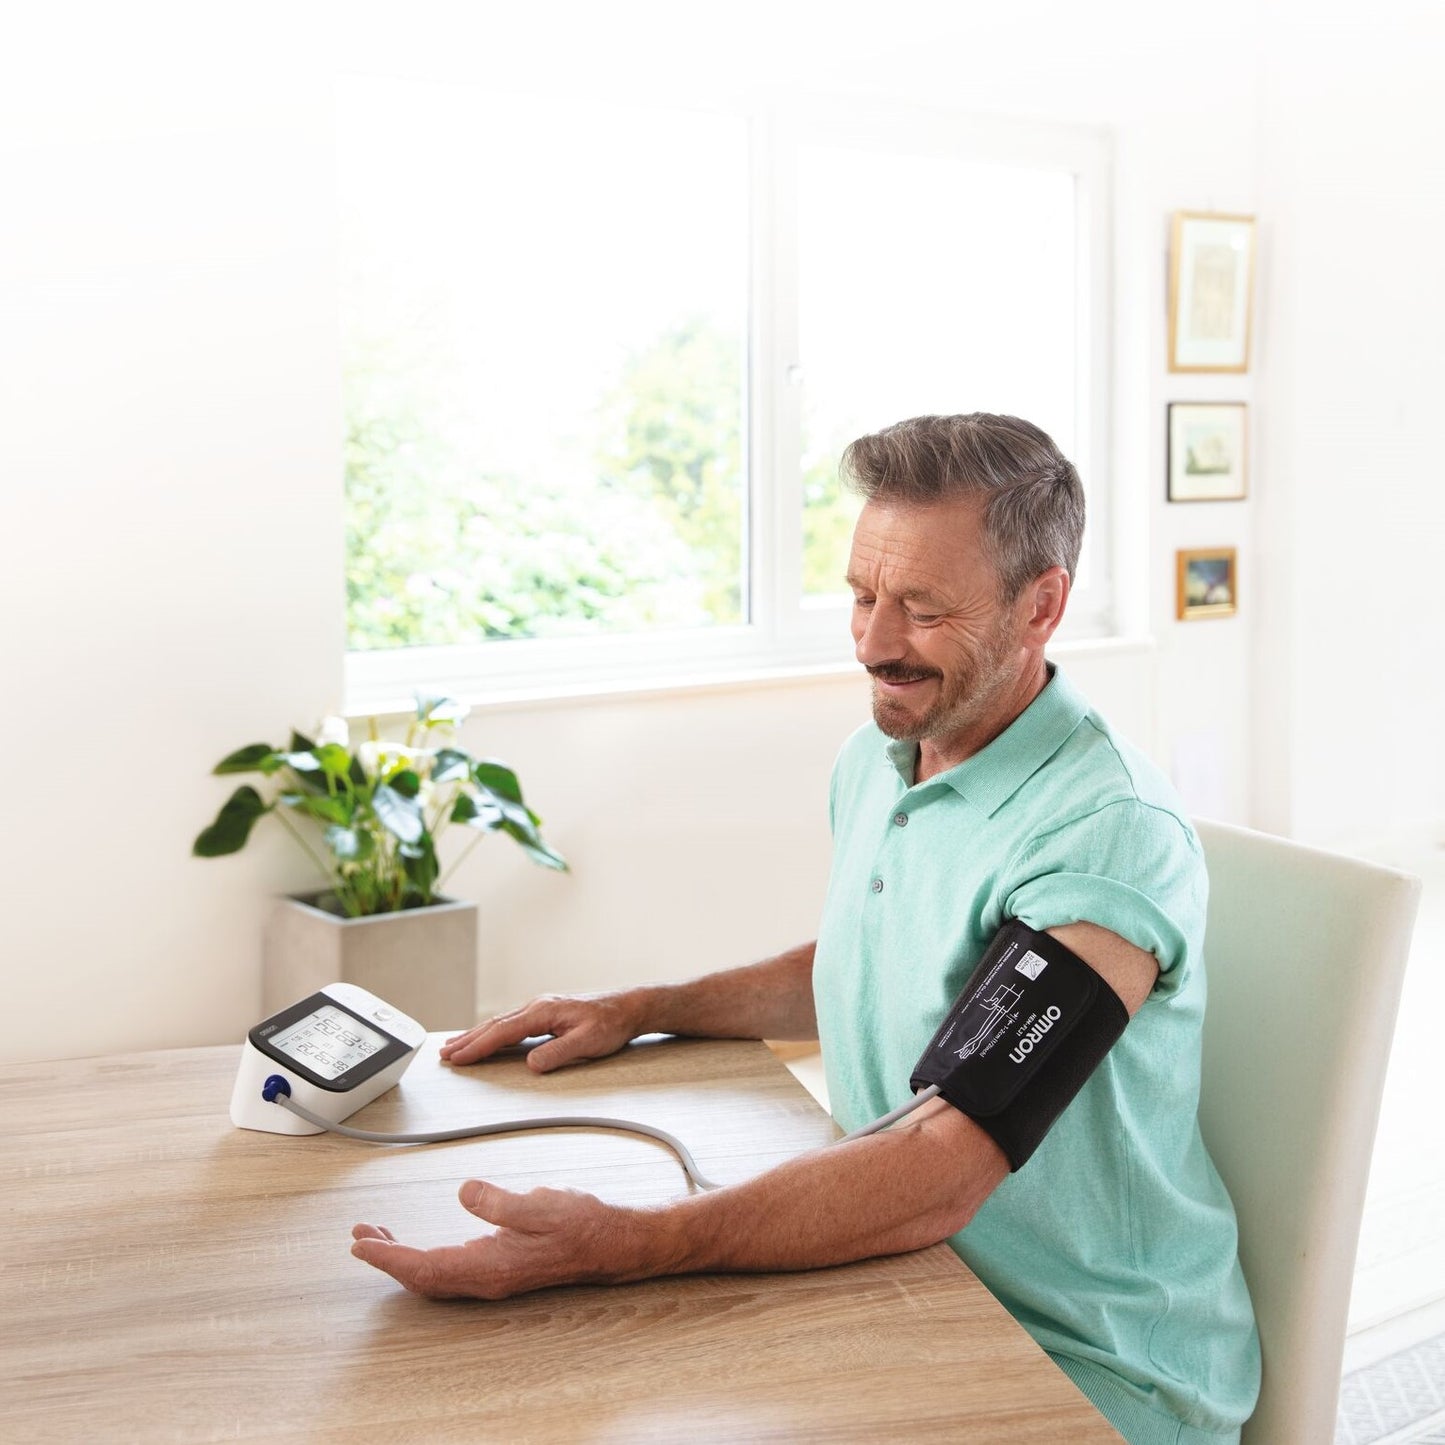 Omron 7 Series Wireless Upper Arm Blood Pressure Monitor (BP7350